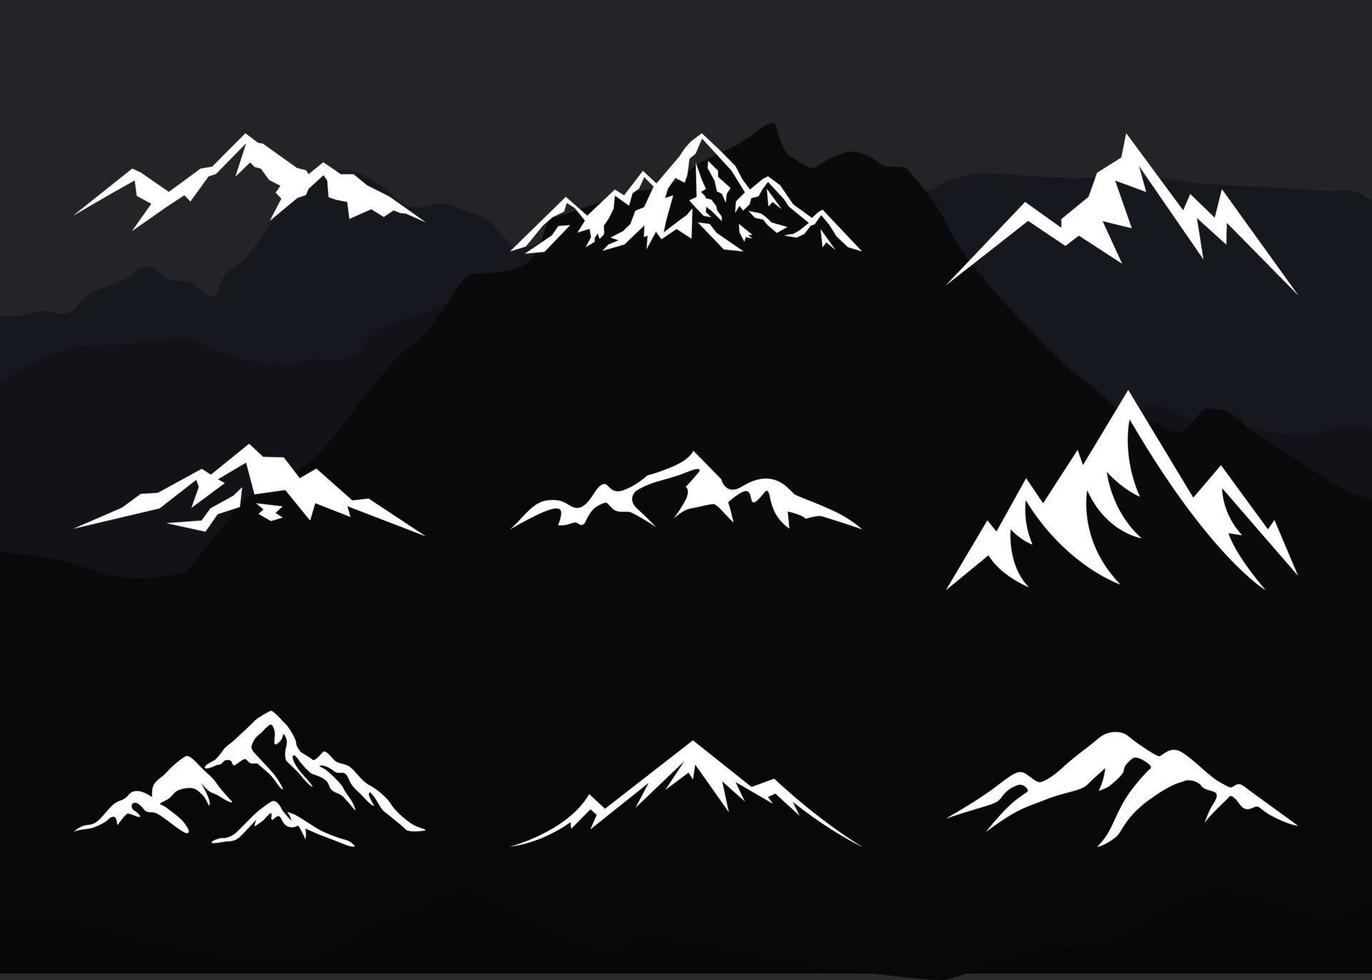 nueve montañas grupo en alto detallado silueta vector